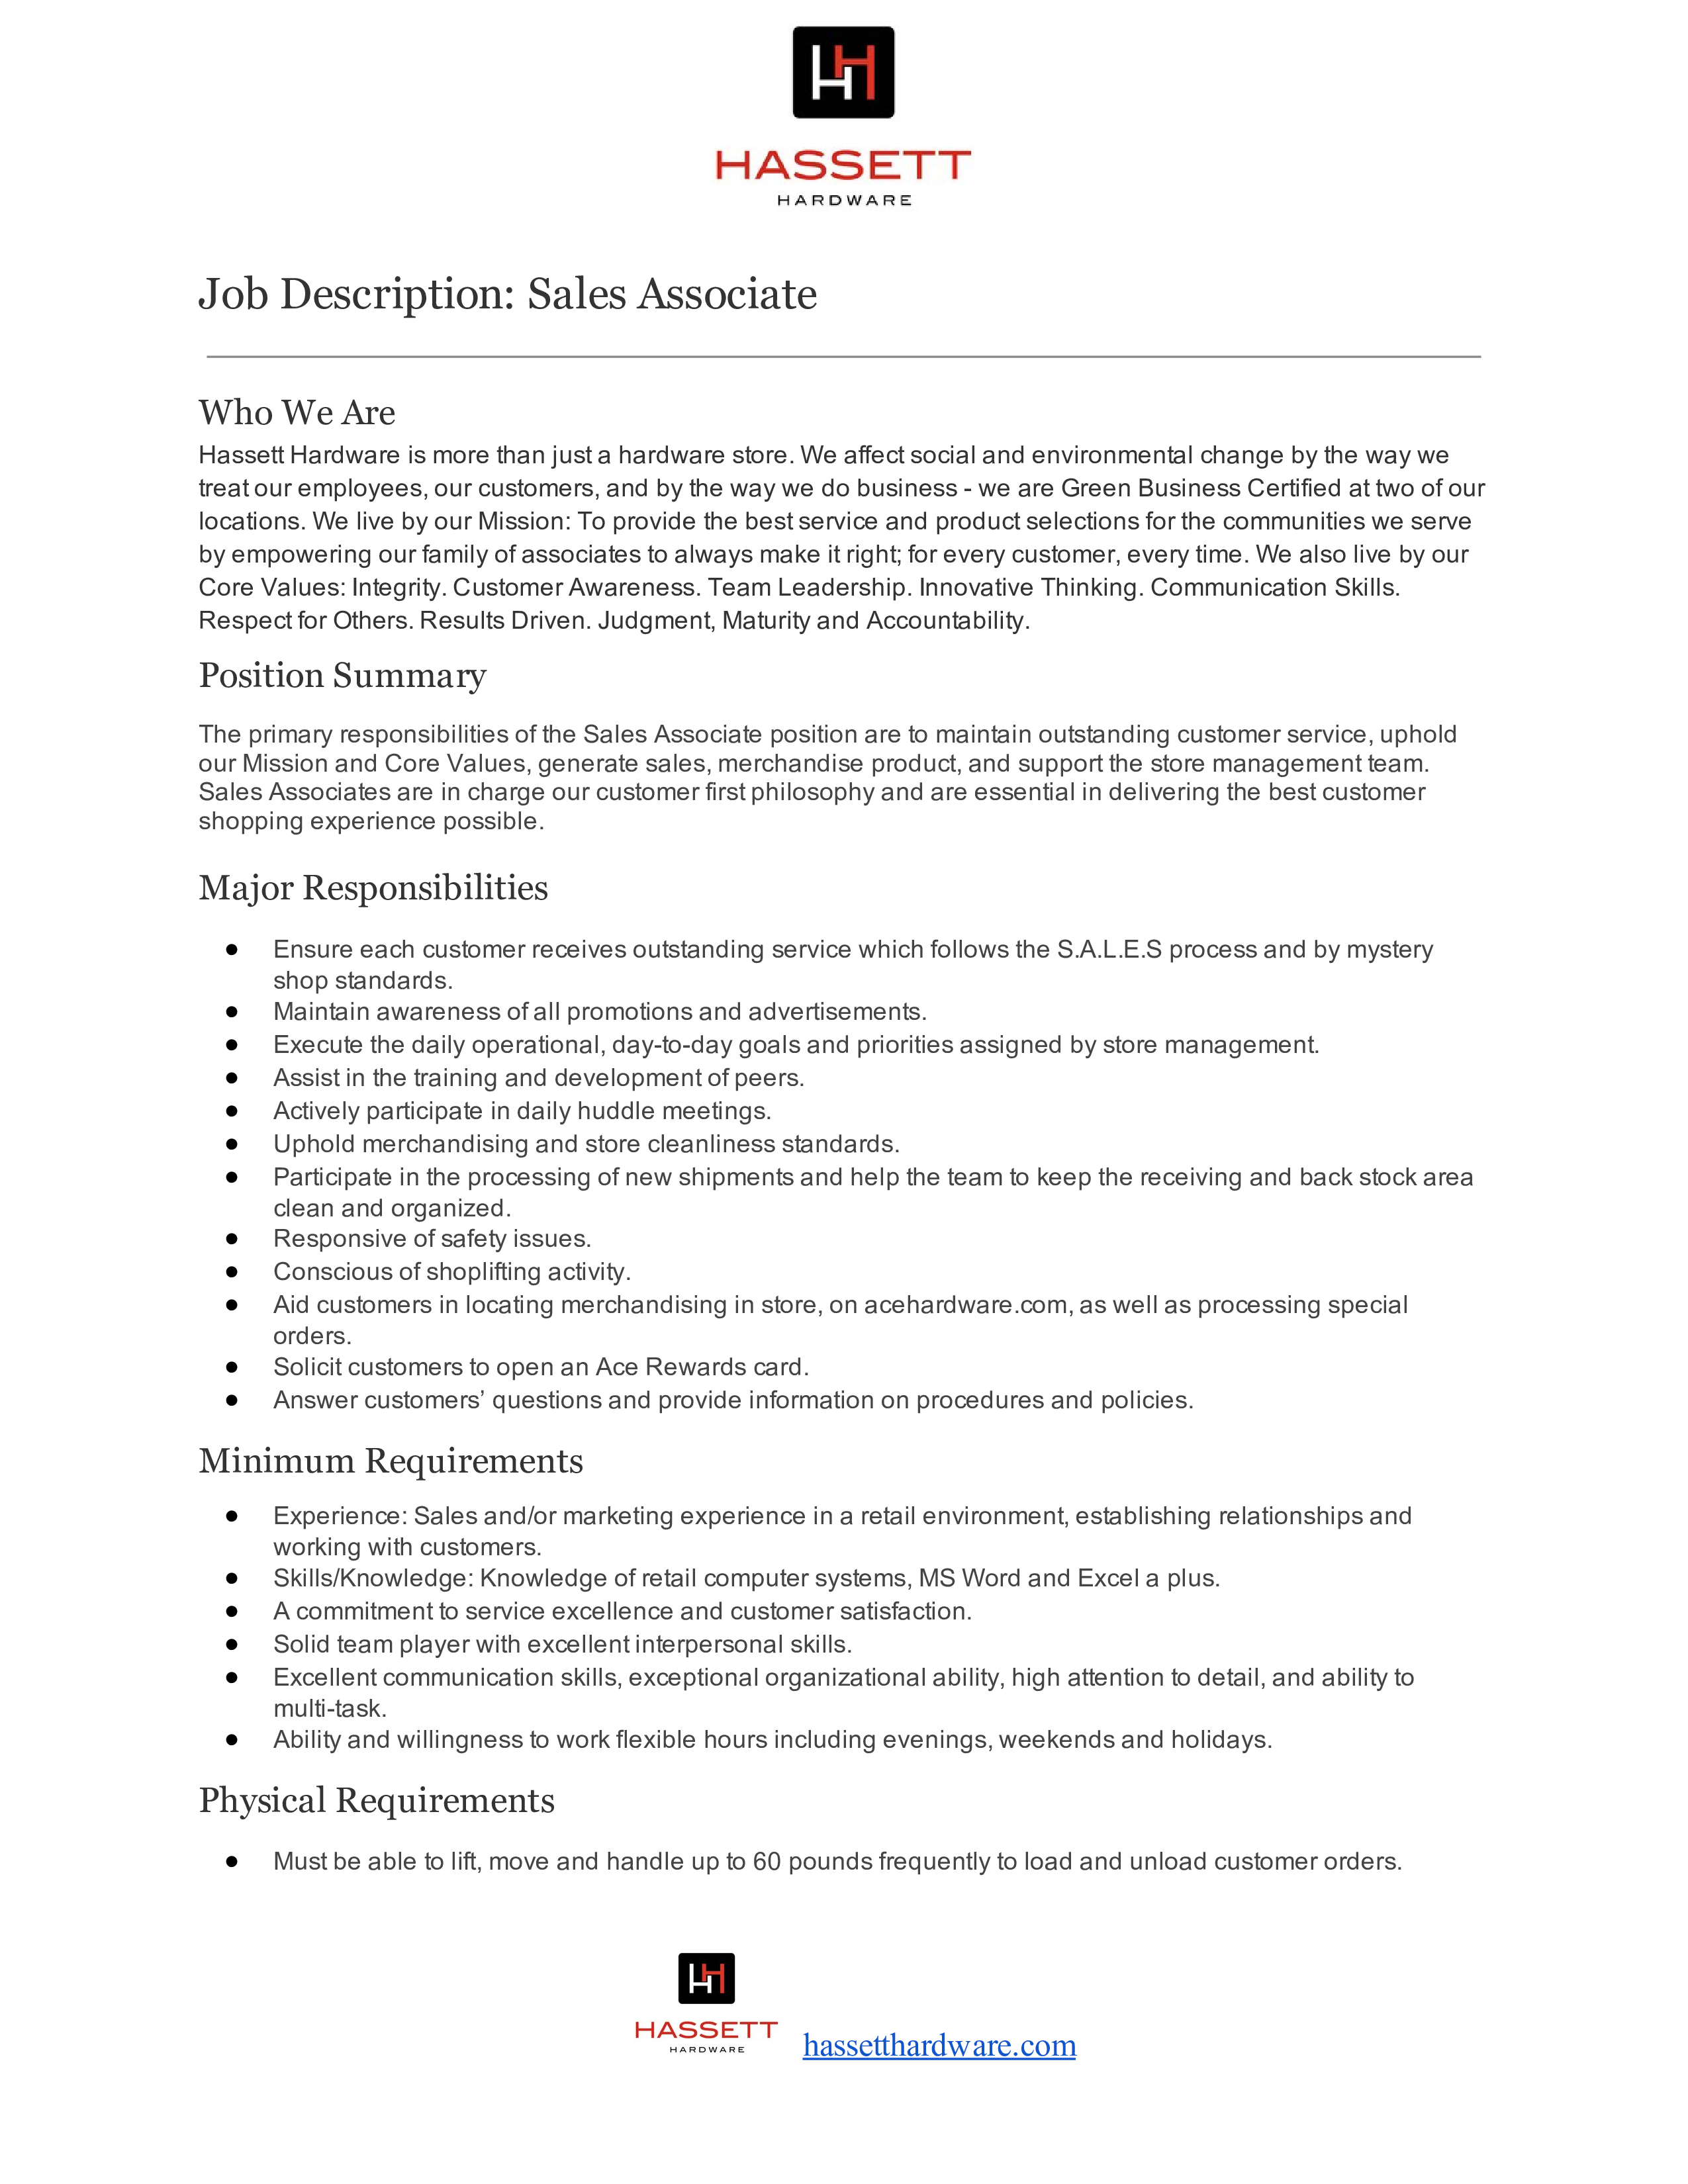 Ross sales associate job description